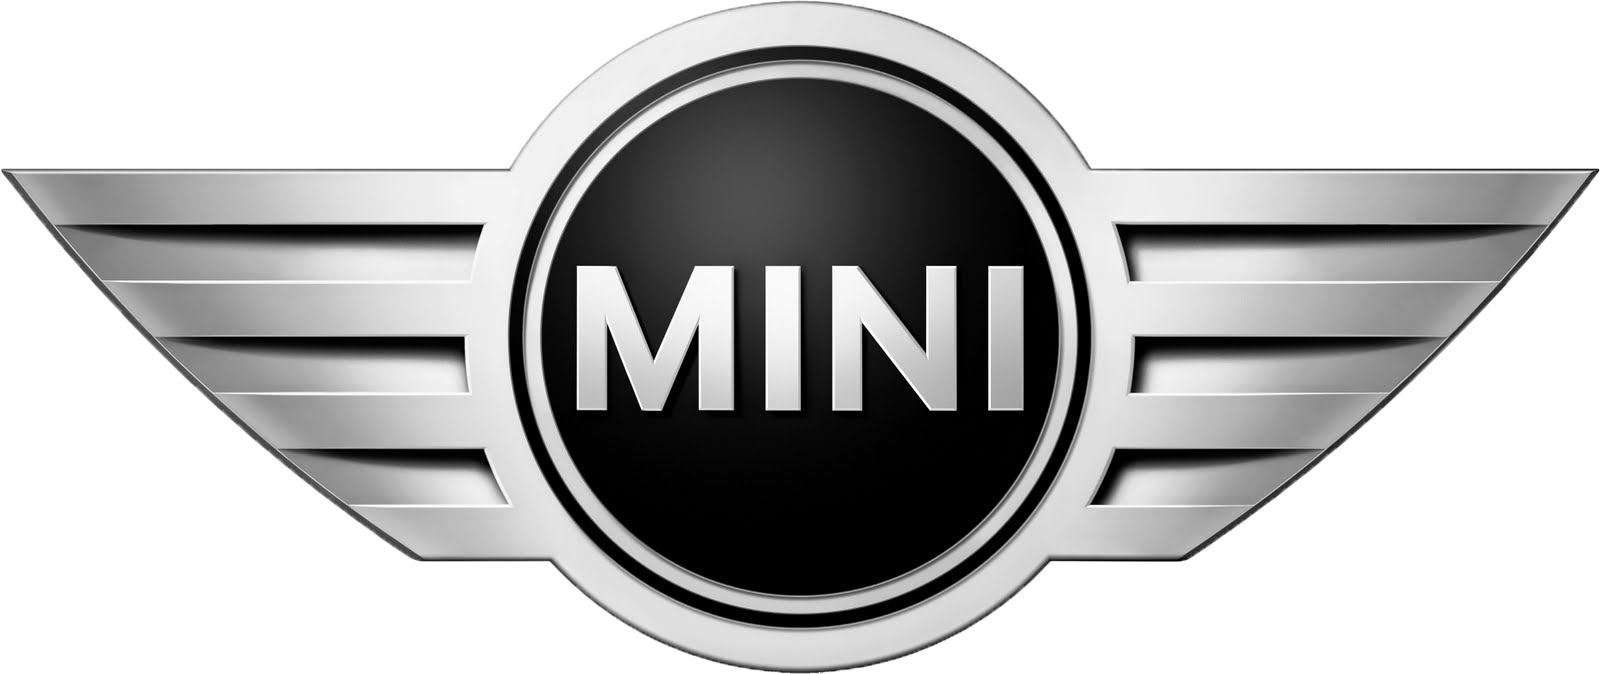 mini cooper car logo brands png images #2321